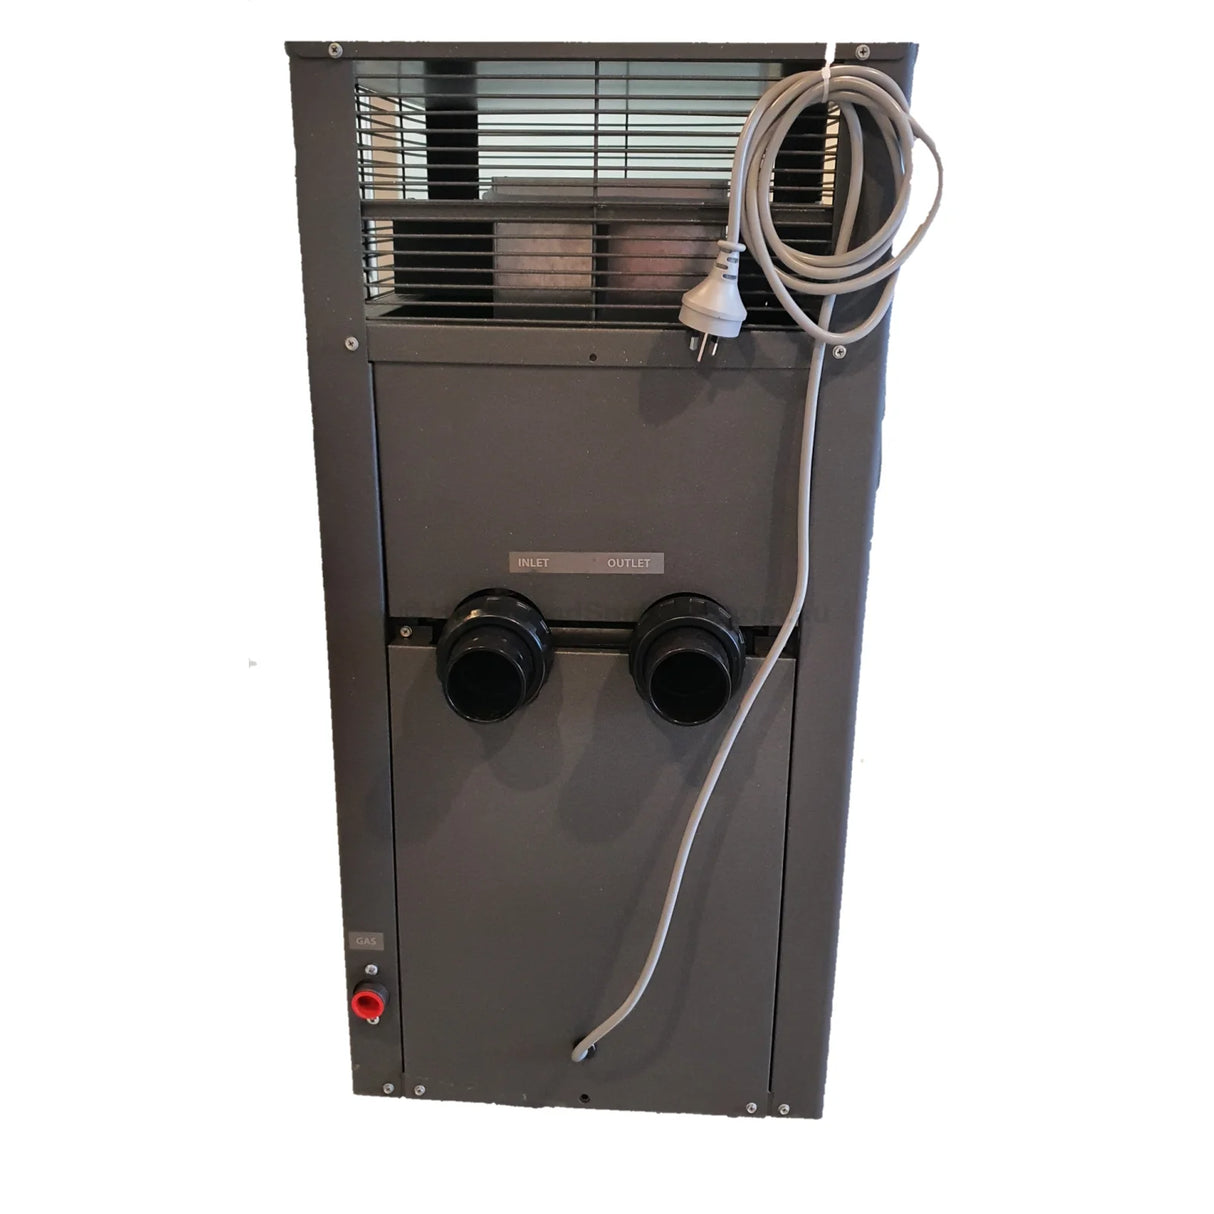 Astralpool / Hurlcon HX 120 Gas Spa Heaters - HX120 - Kept In Stock - Heater and Spa Parts